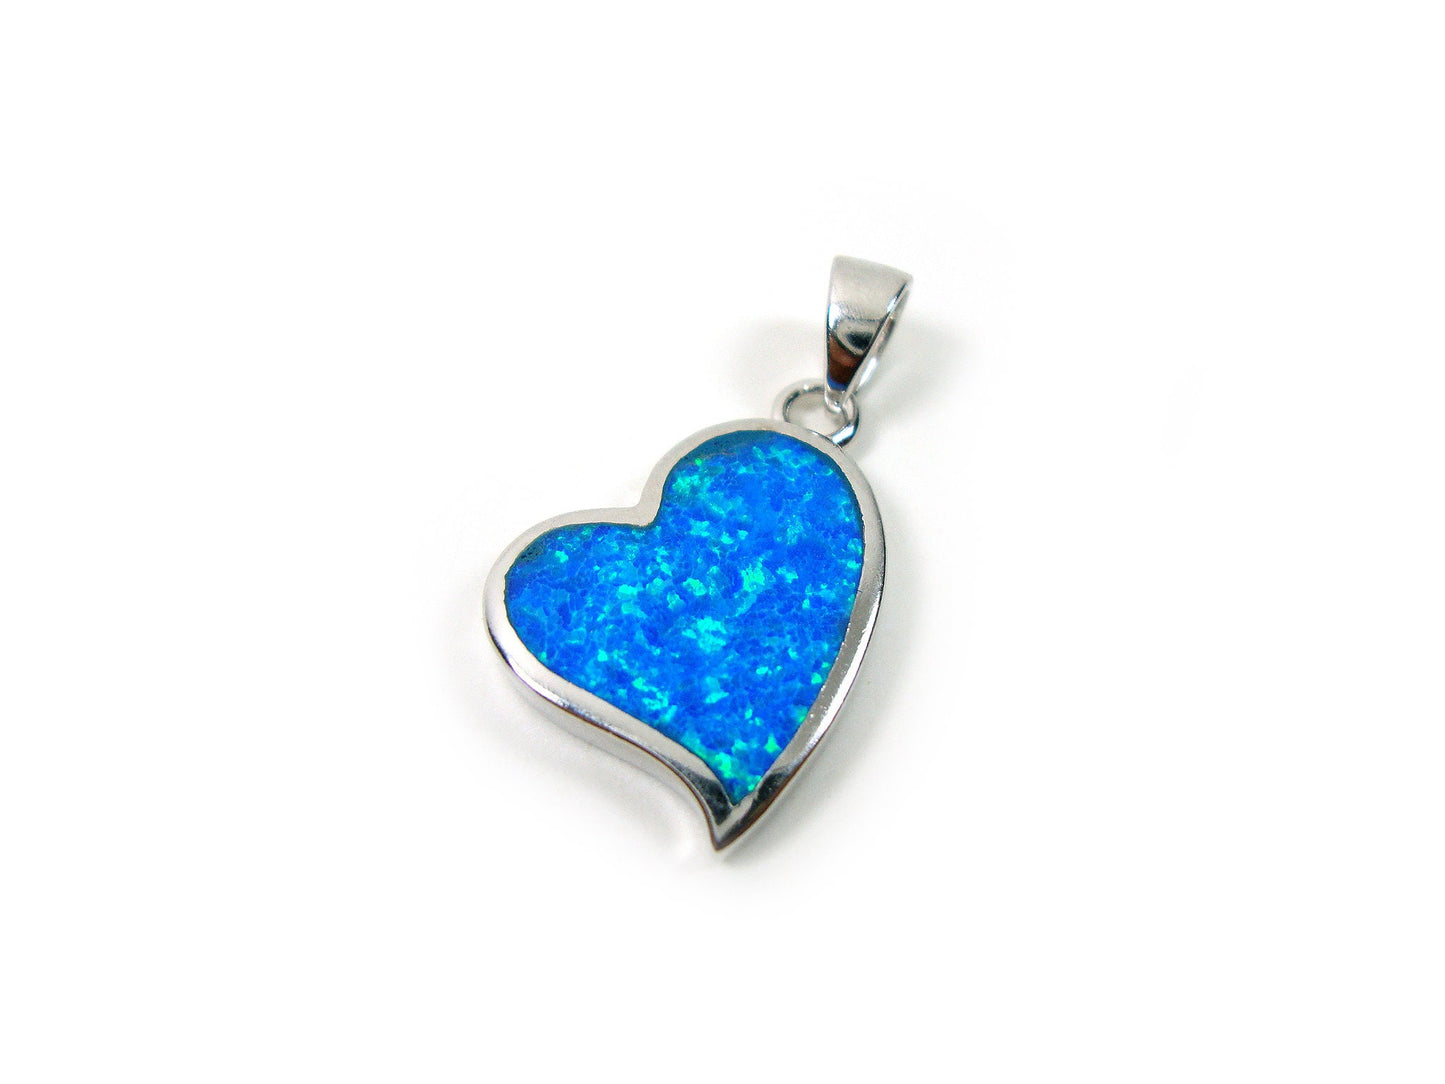 Sterling Silver 925 Heart Tropical Ocean Blue Opal Pendant 19x15mm, Friendship Love Relationship Pendant, Griechisches Blau Opal Anhanger